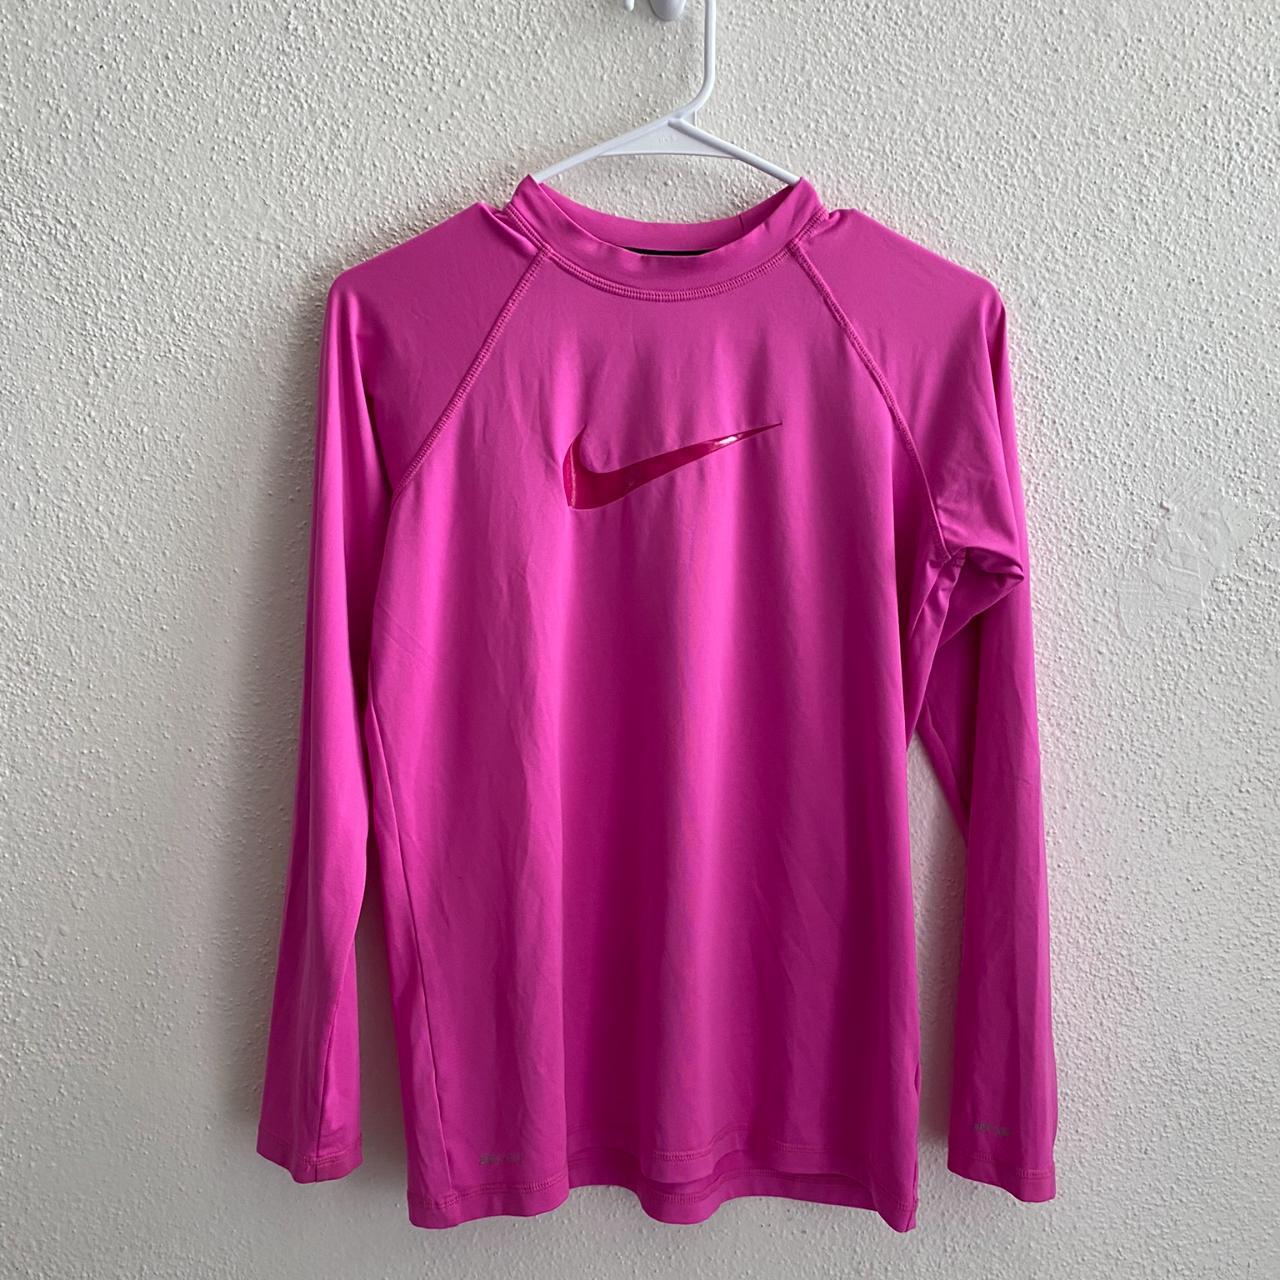 Nike Men's Pink Cover-ups